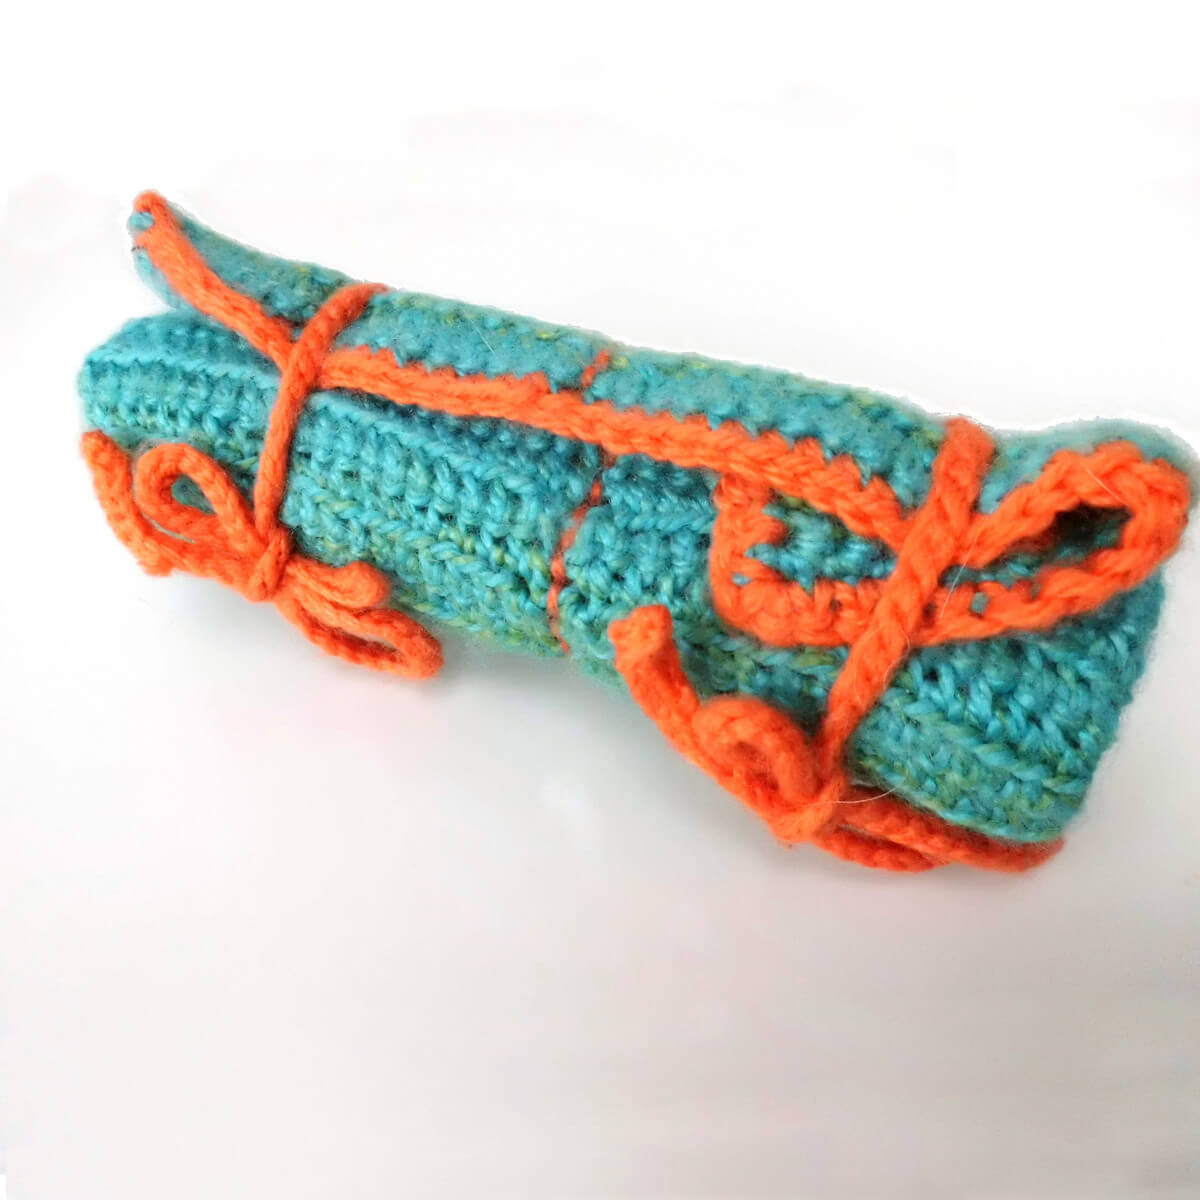 Crochet Hook Sizes, Gauge and Chaining, BEGINNER